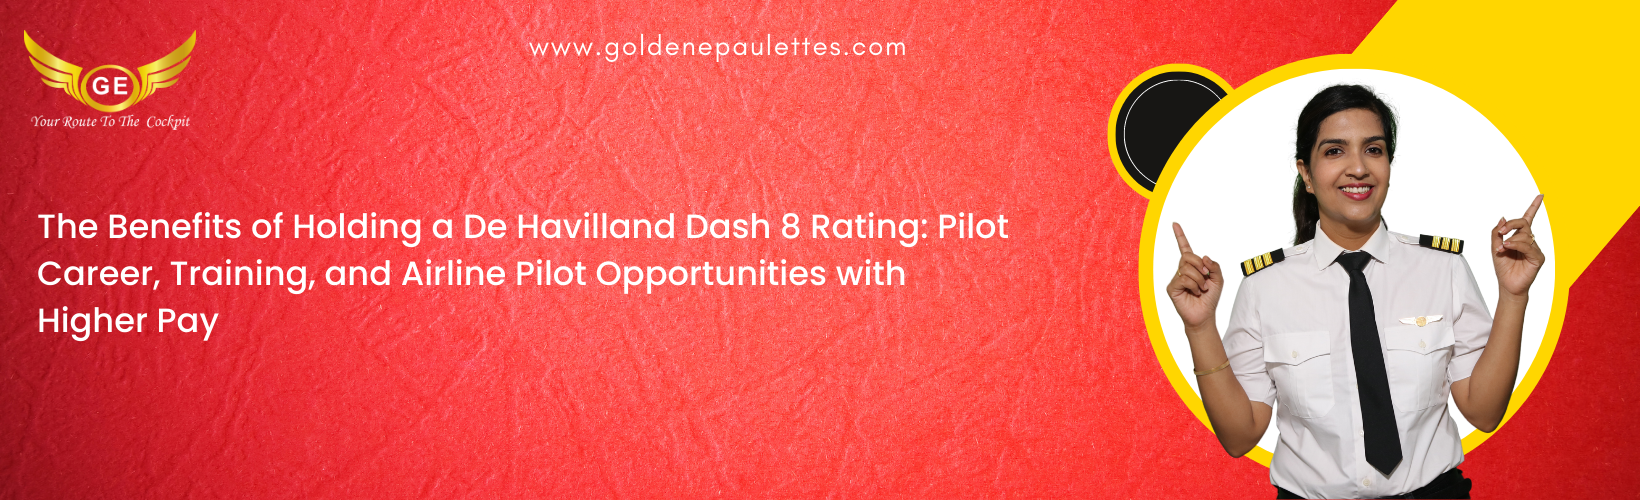 The Benefits of Having a De Havilland Dash 8 Rating